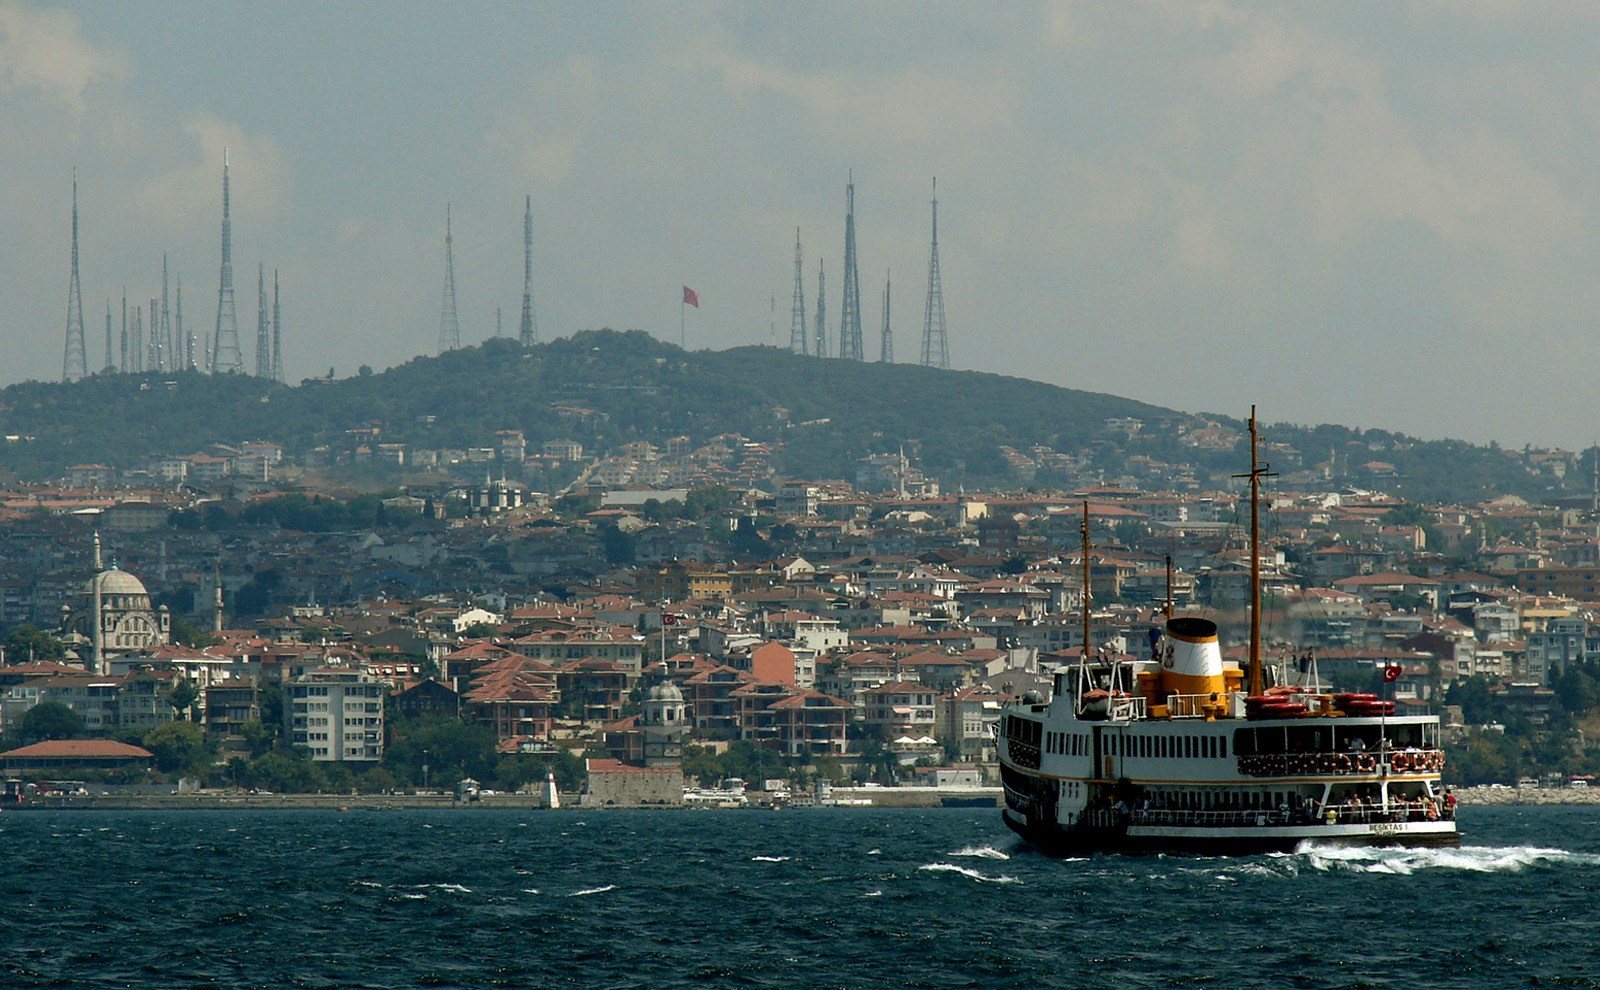 Istanbul tur. Экскурсии в Стамбуле 2022. Стамбул фото города 2021. Панорамный Стамбул 2022 году. Сан Себастьян в Стамбуле.